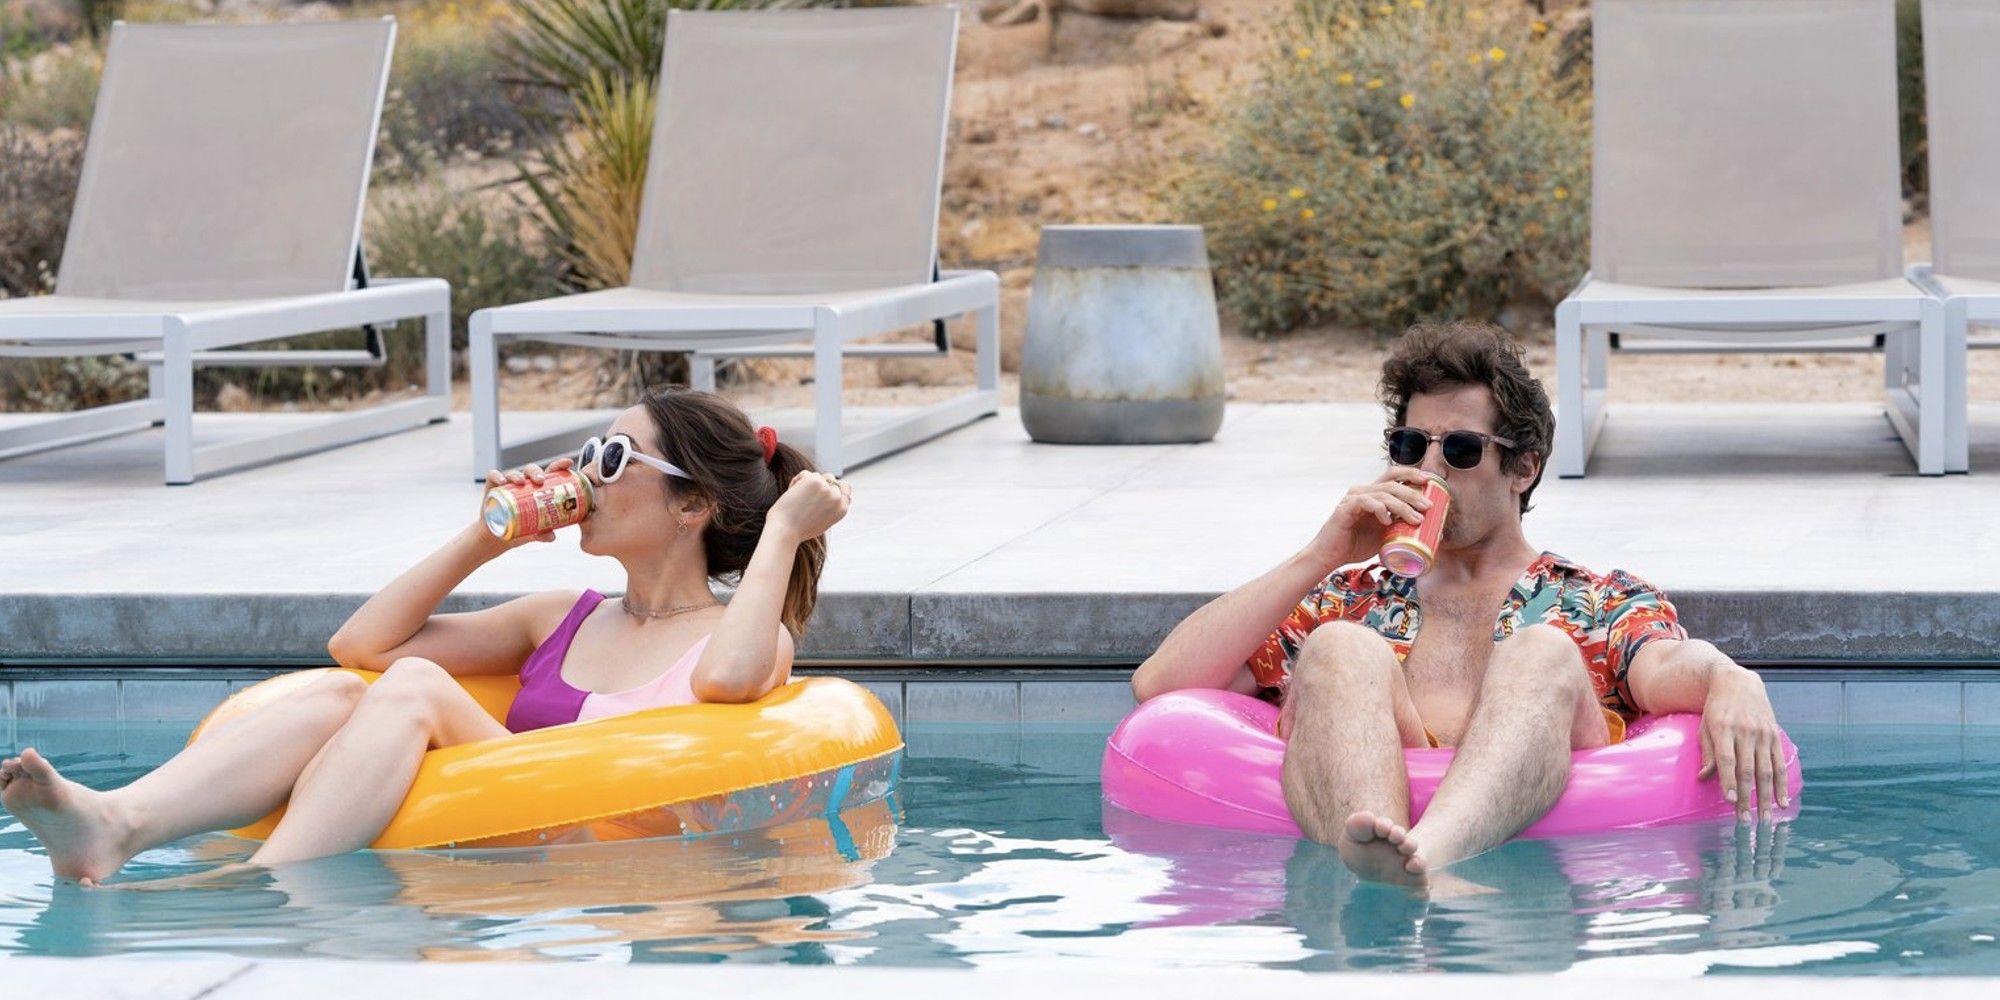 Andy Samberg et Cristin Milioti dans 'Palm Springs'.